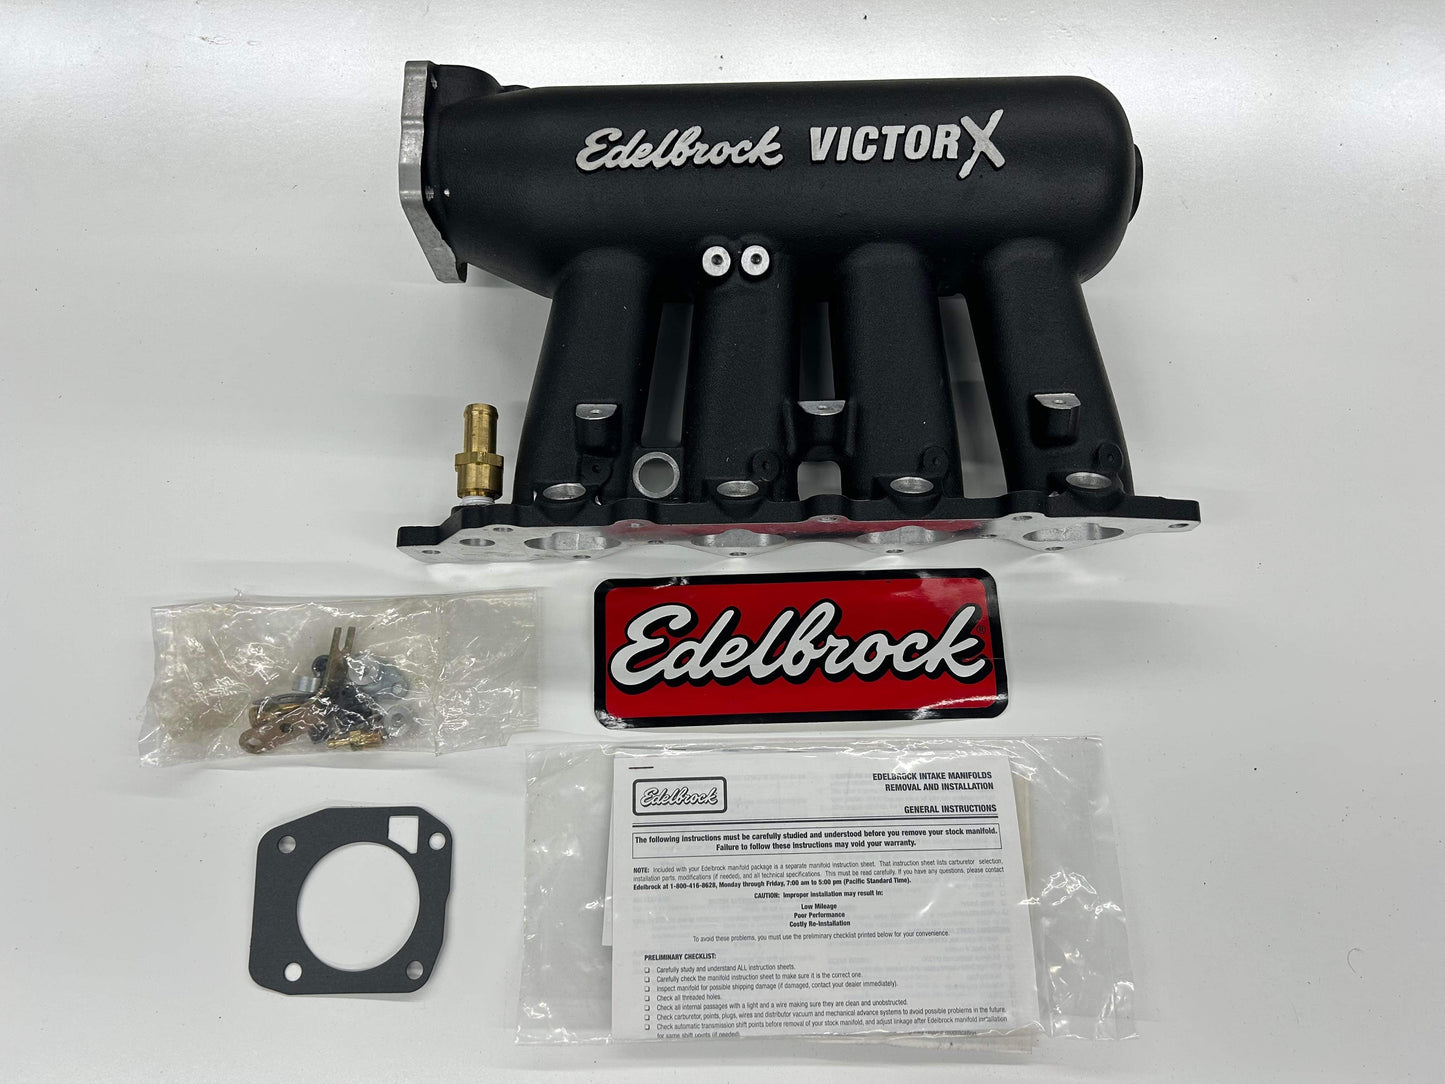 Edelbrock Victor X Black Edition